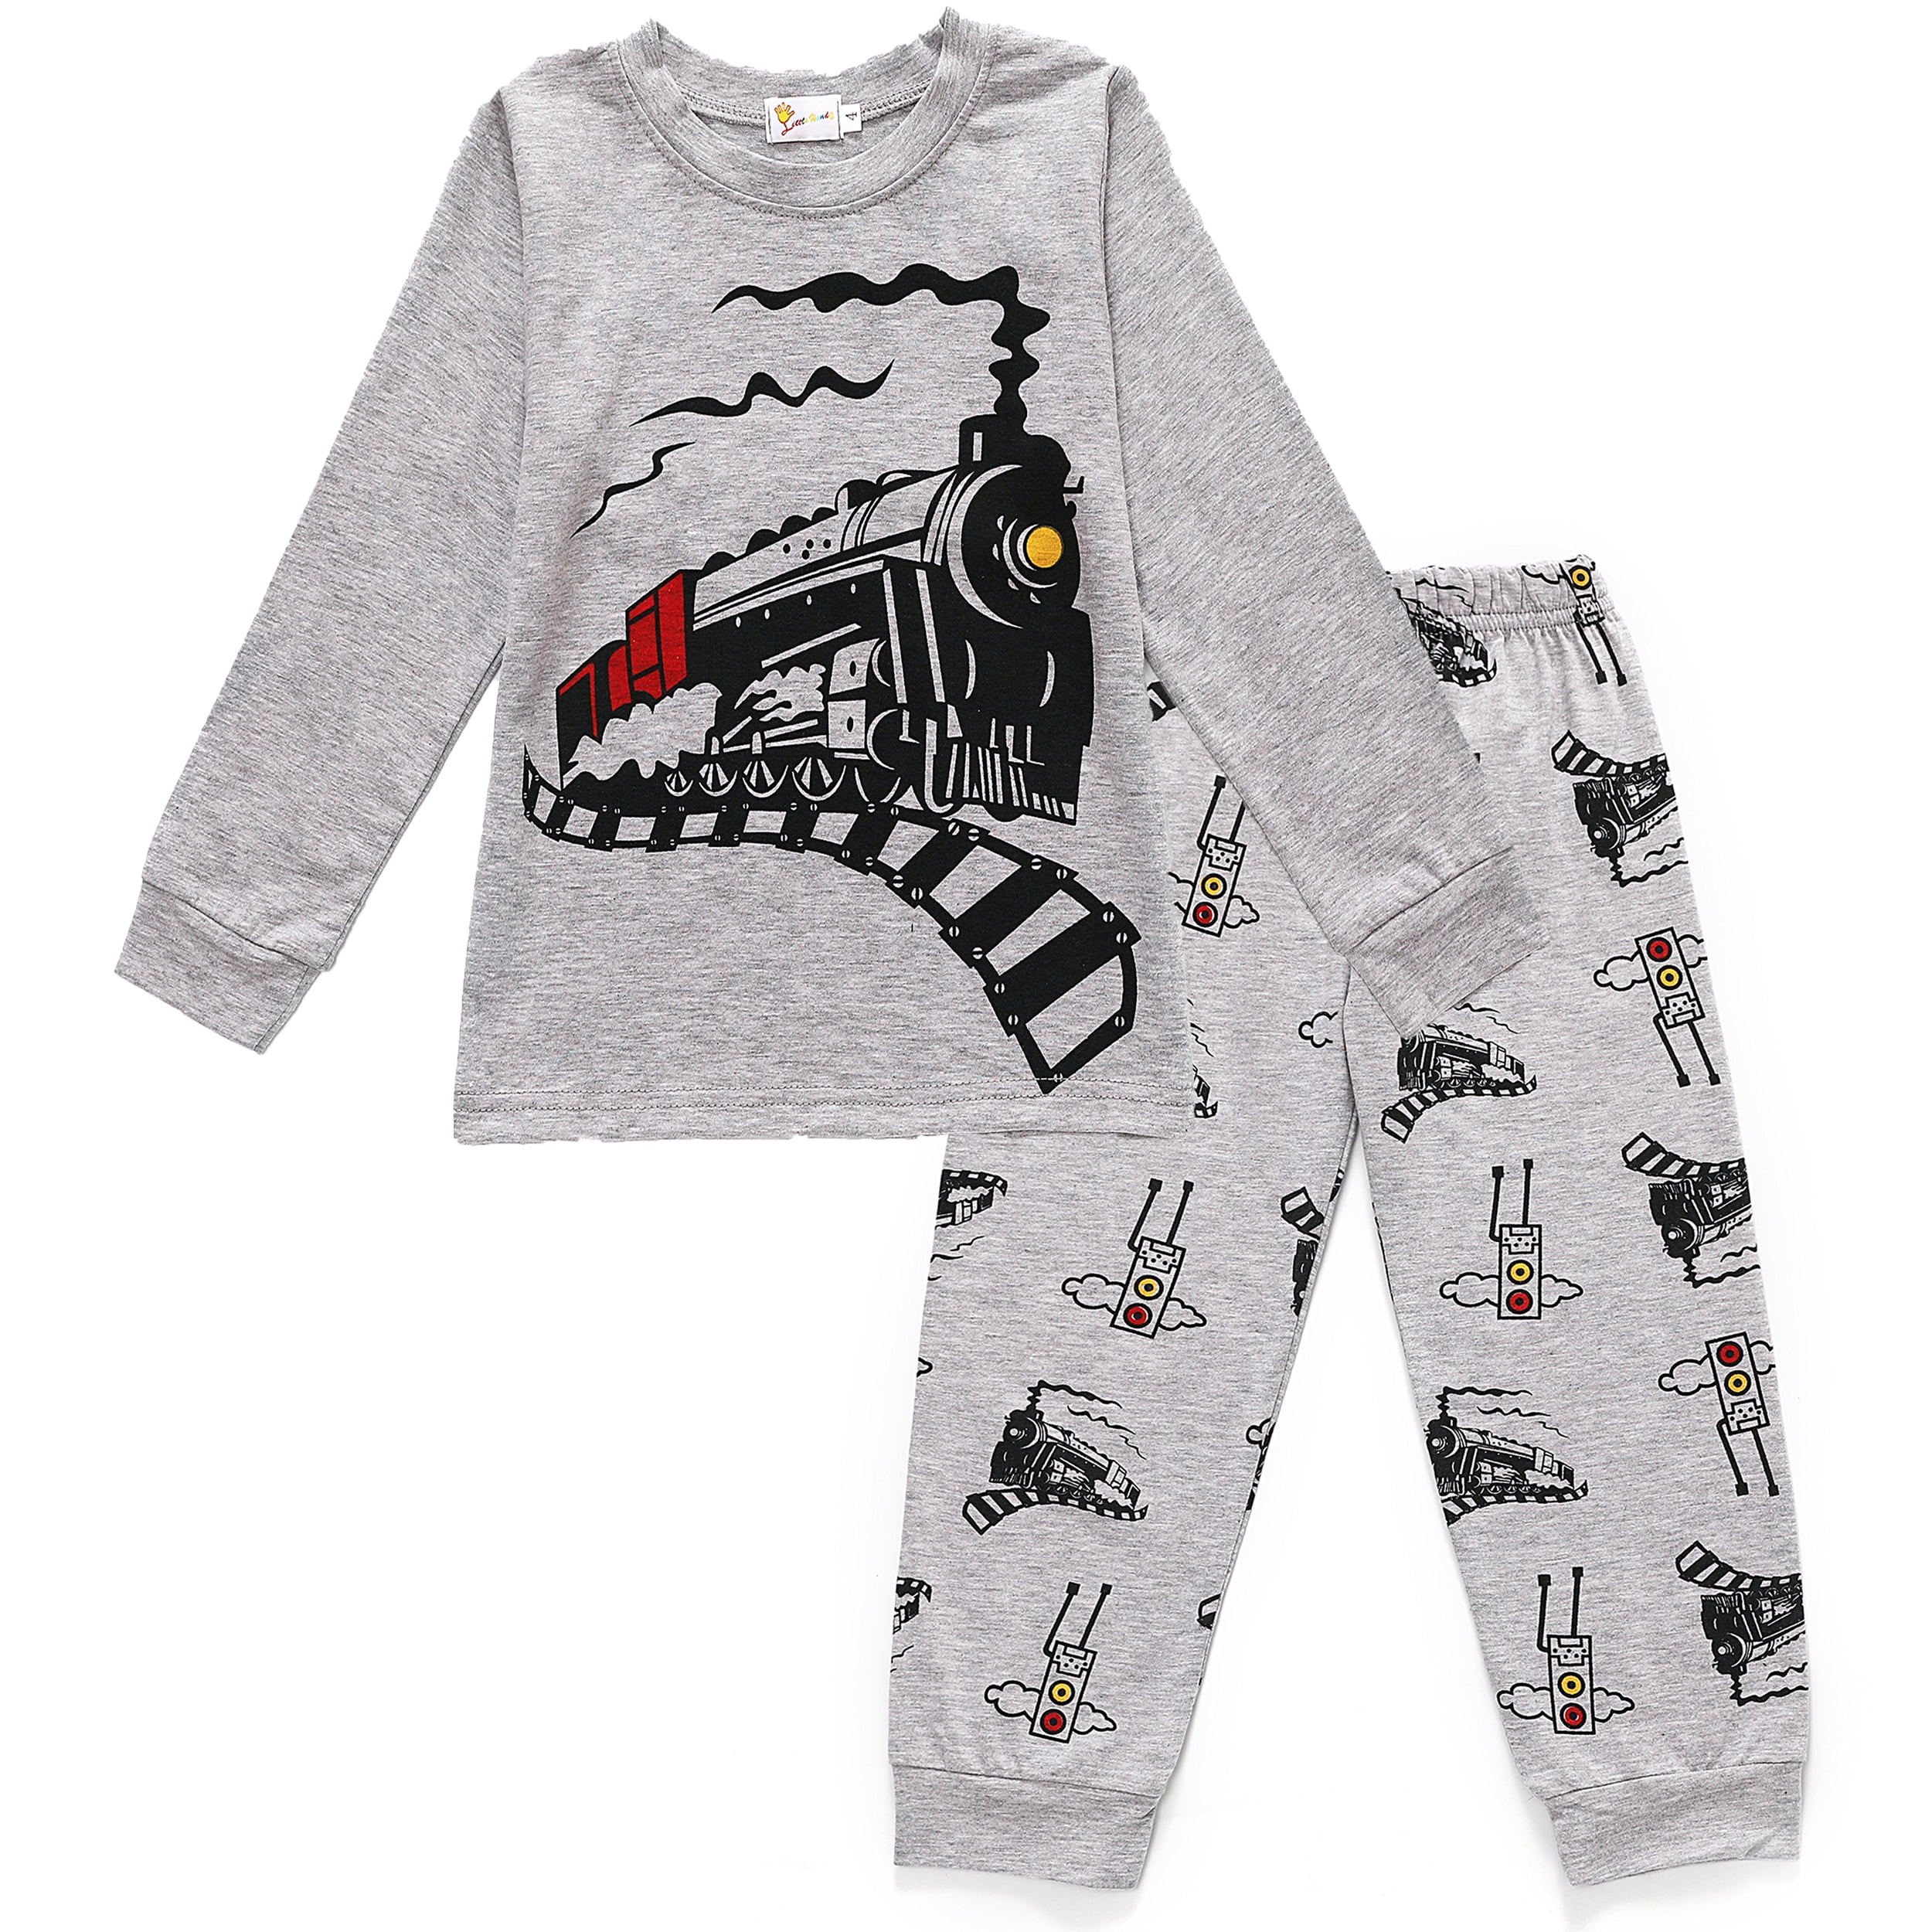 Boys Christmas Pyjamas Set Toddler Kids Cars Train Truck Print Pjs Sets 100% Cotton Long Sleeve Nightwear Sleepwear Clothes Set for Boy